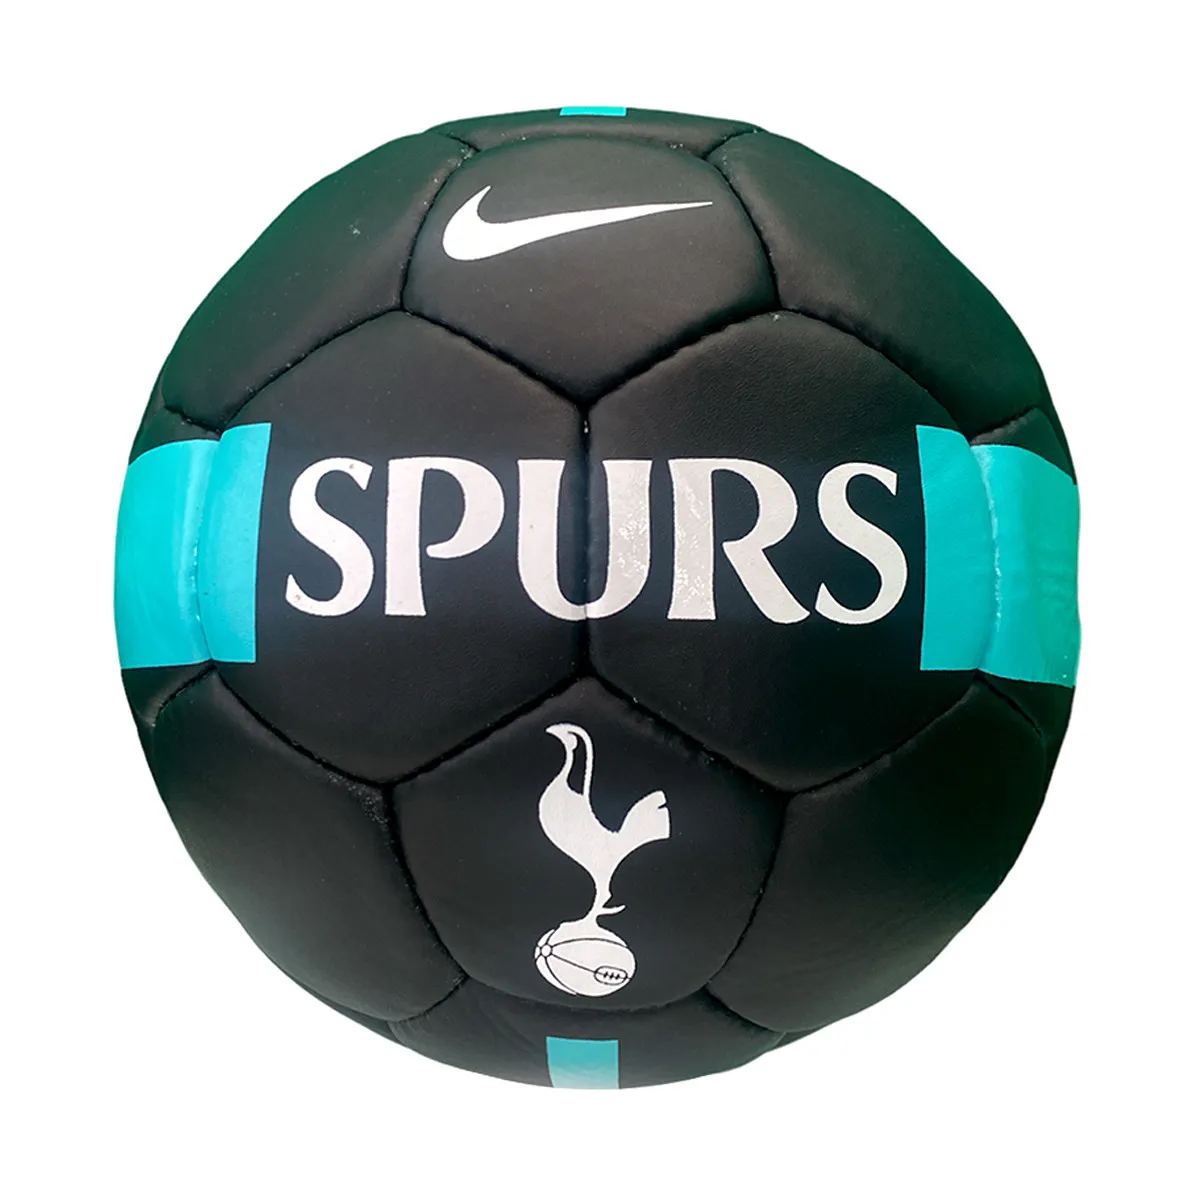 Futbol'nyy myach Nike Tottenham
#1